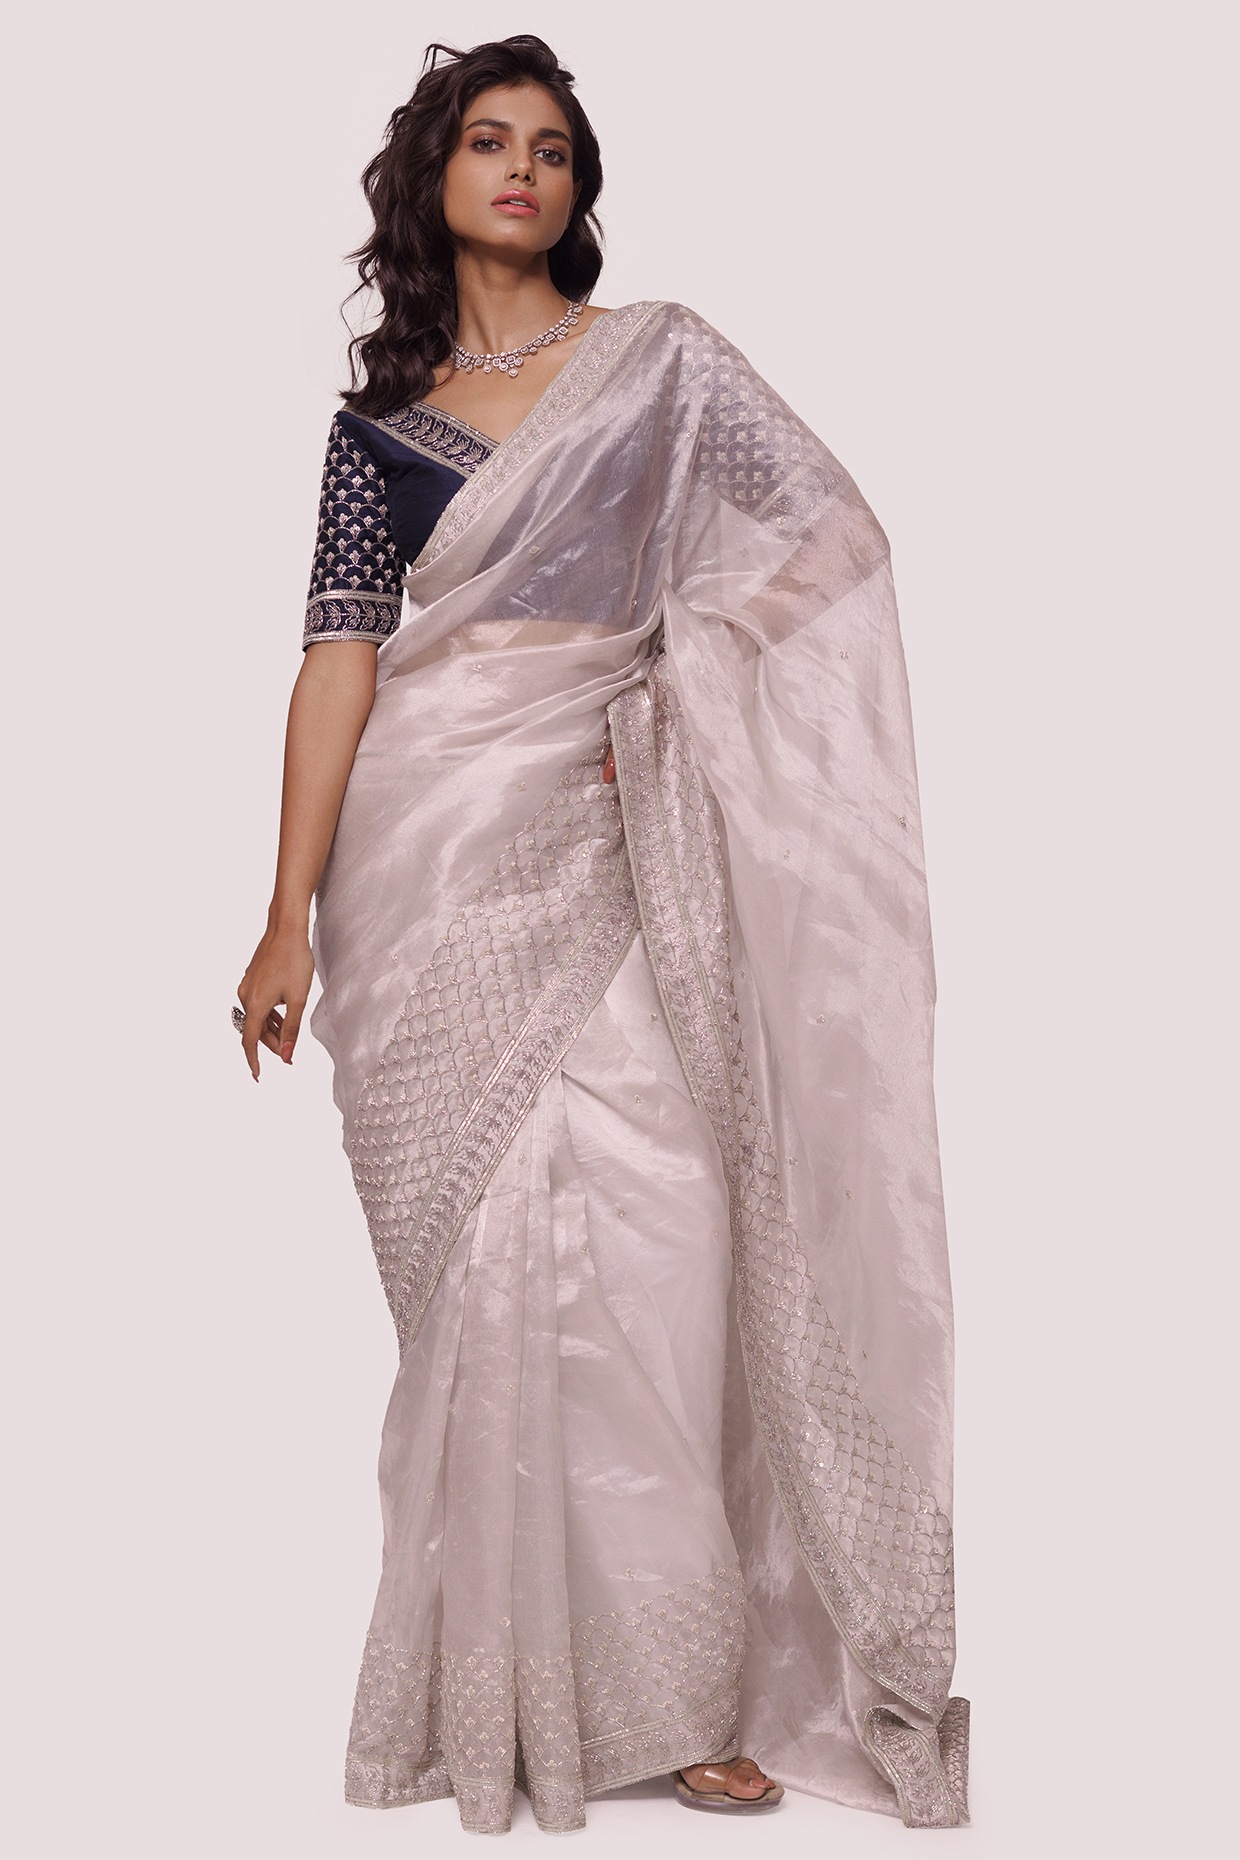 Buy SAREEWALAH Banarasi Soft Tissue Silk Saree | Banarasi Tissue Saree | Banarasi  Saree For Party, Wedding, And Festivals-SW_19 at Amazon.in